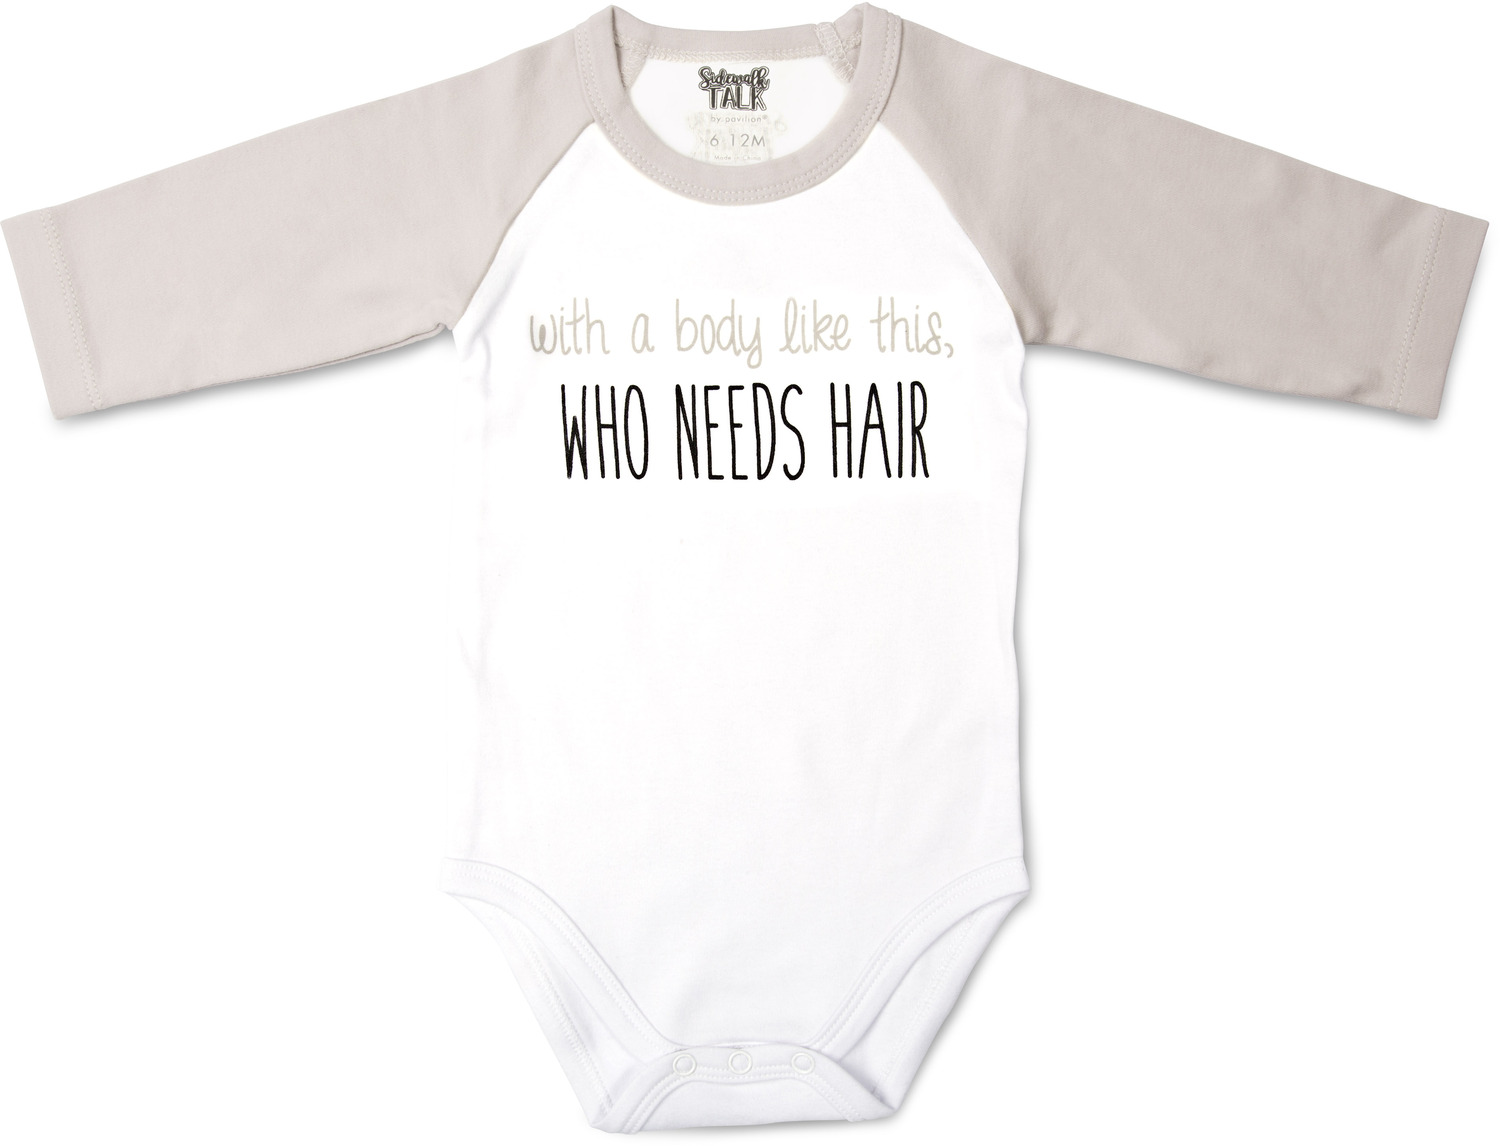 Who Needs Hair by Sidewalk Talk - Who Needs Hair - 6-12 Months 3/4 Length Gray Sleeve Onesie